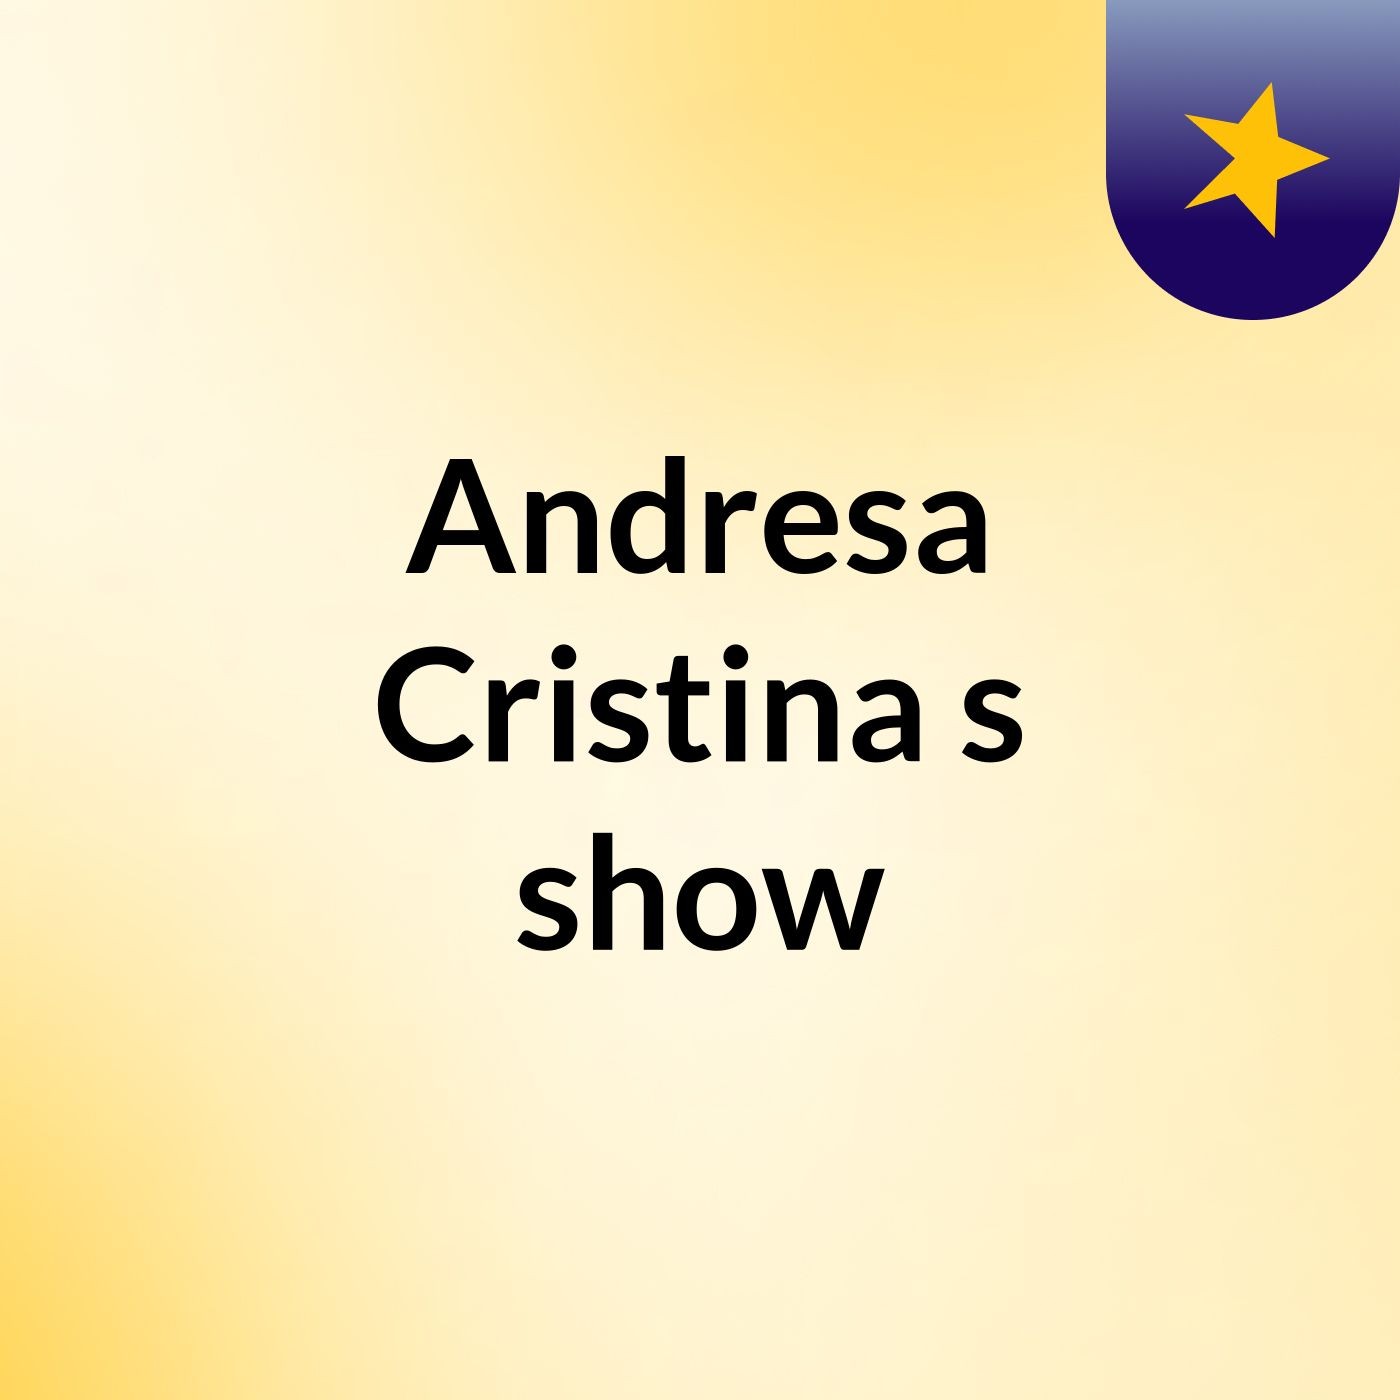 Andresa Cristina's show